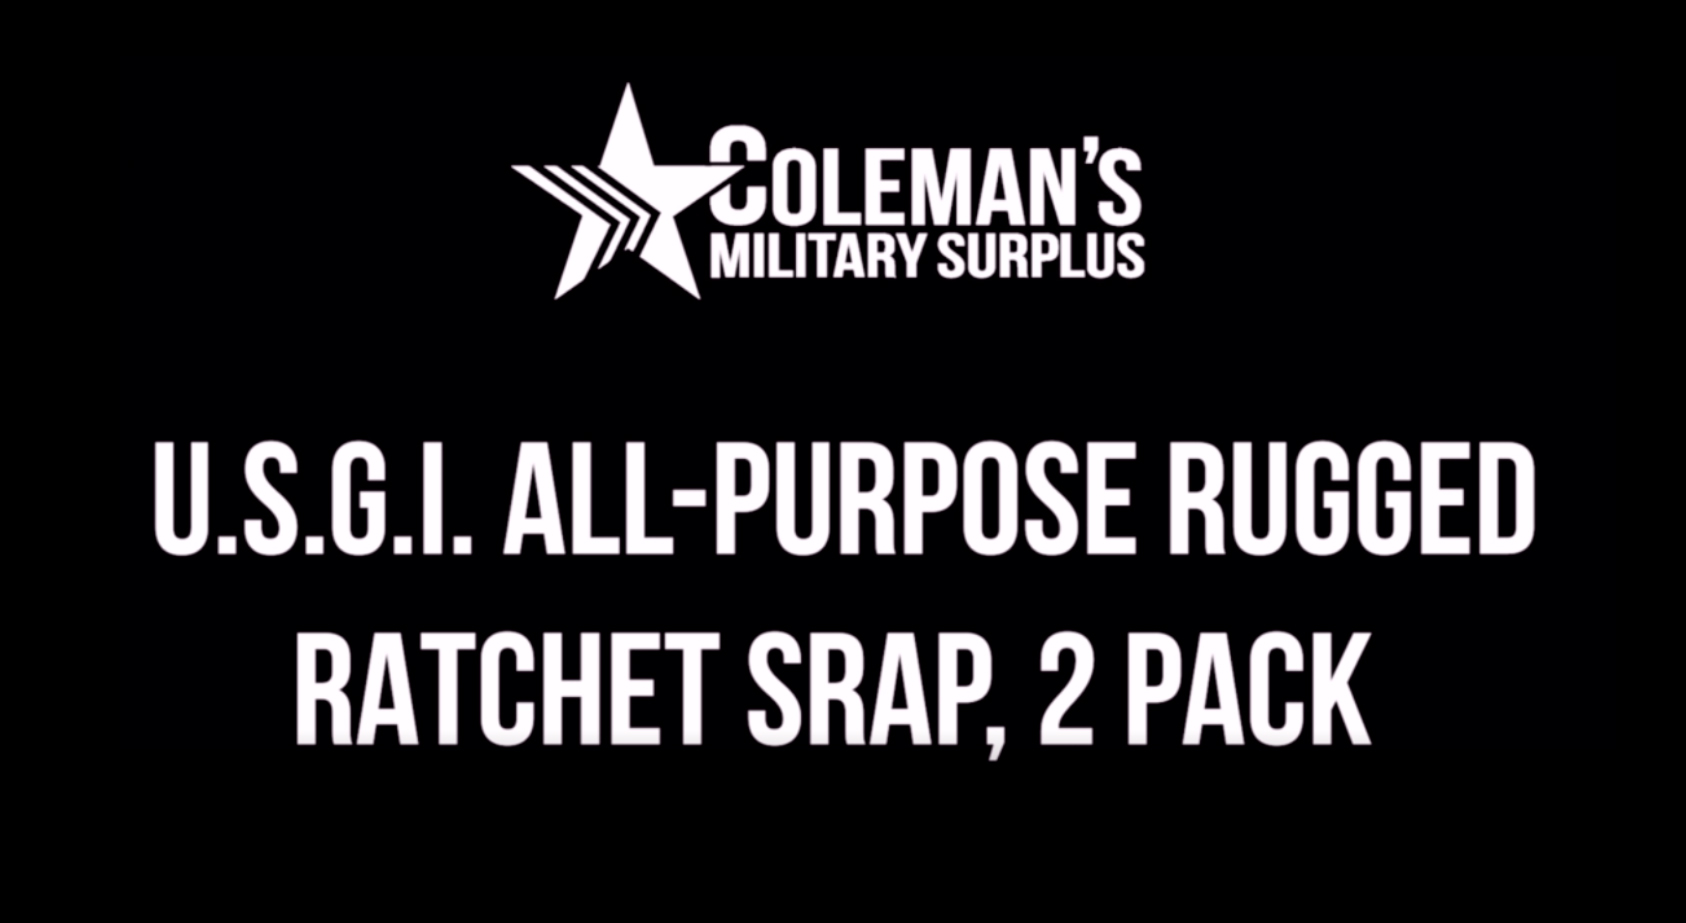 U.S. G.I. All-Purpose Rugged Ratchet Strap, 2 Pack